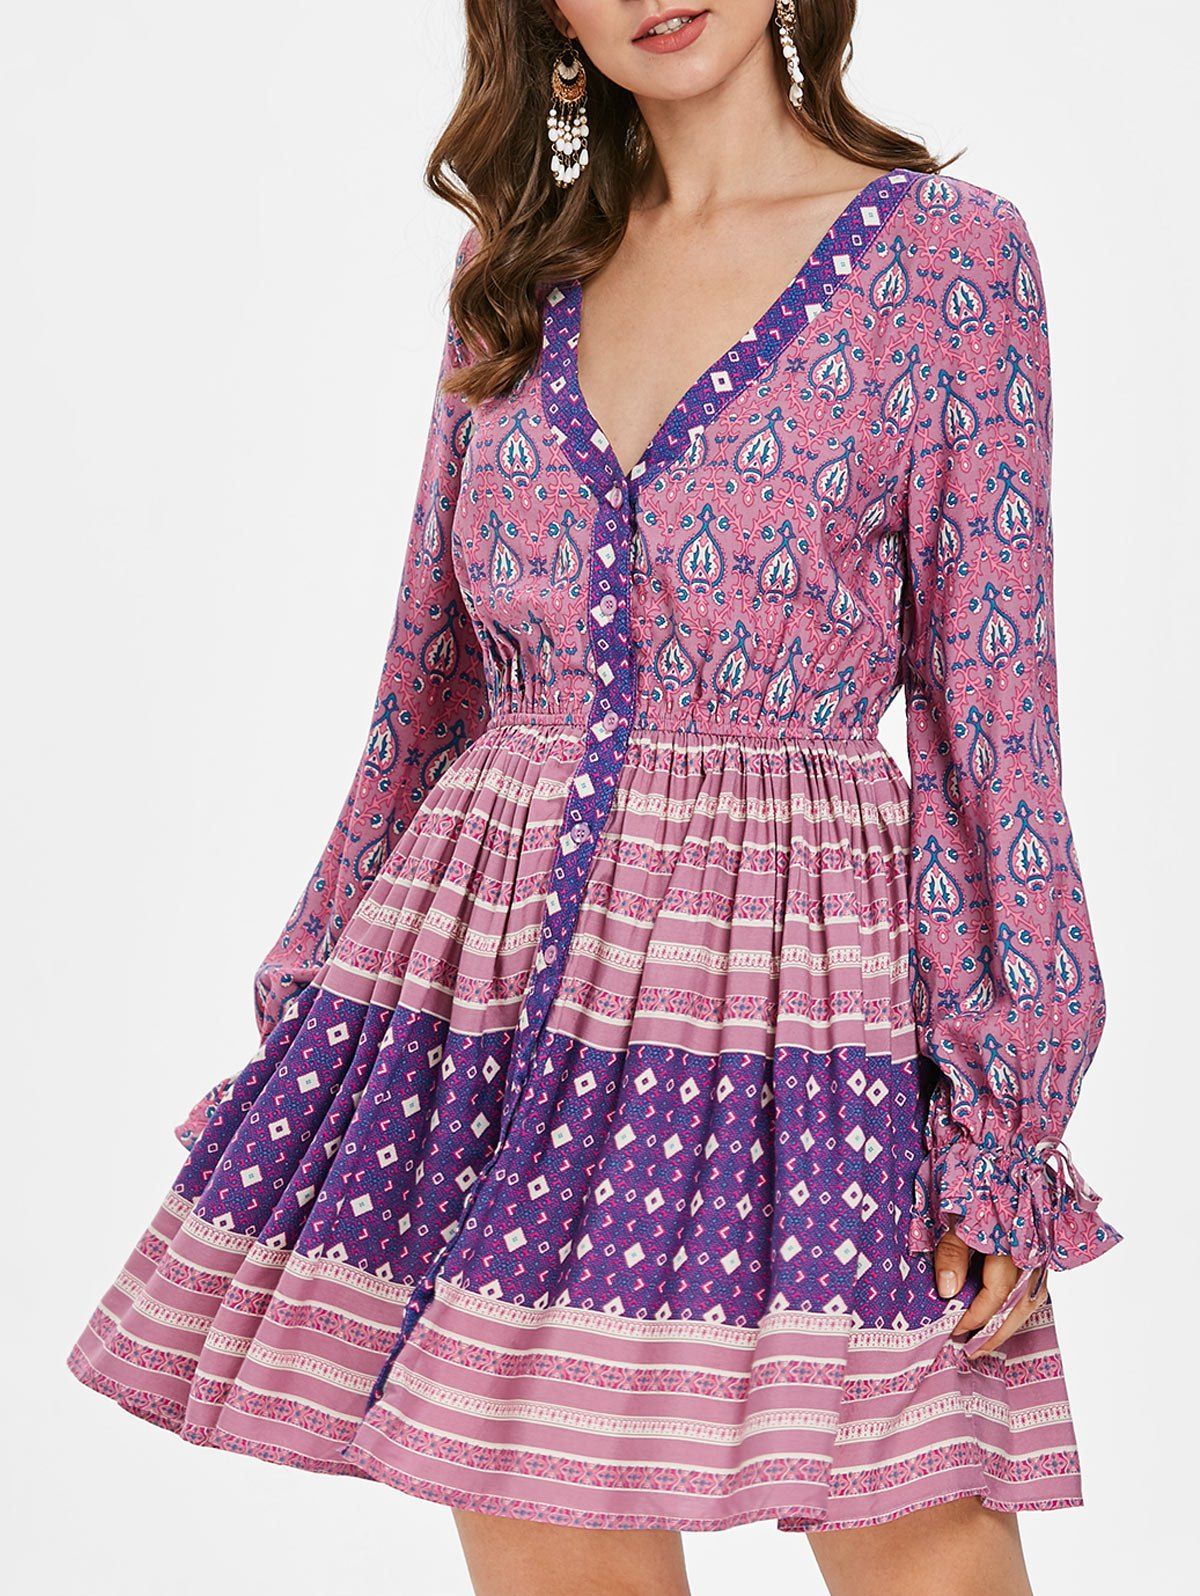 Ethnic Print Buttoned Tunic Dress - multicolor M